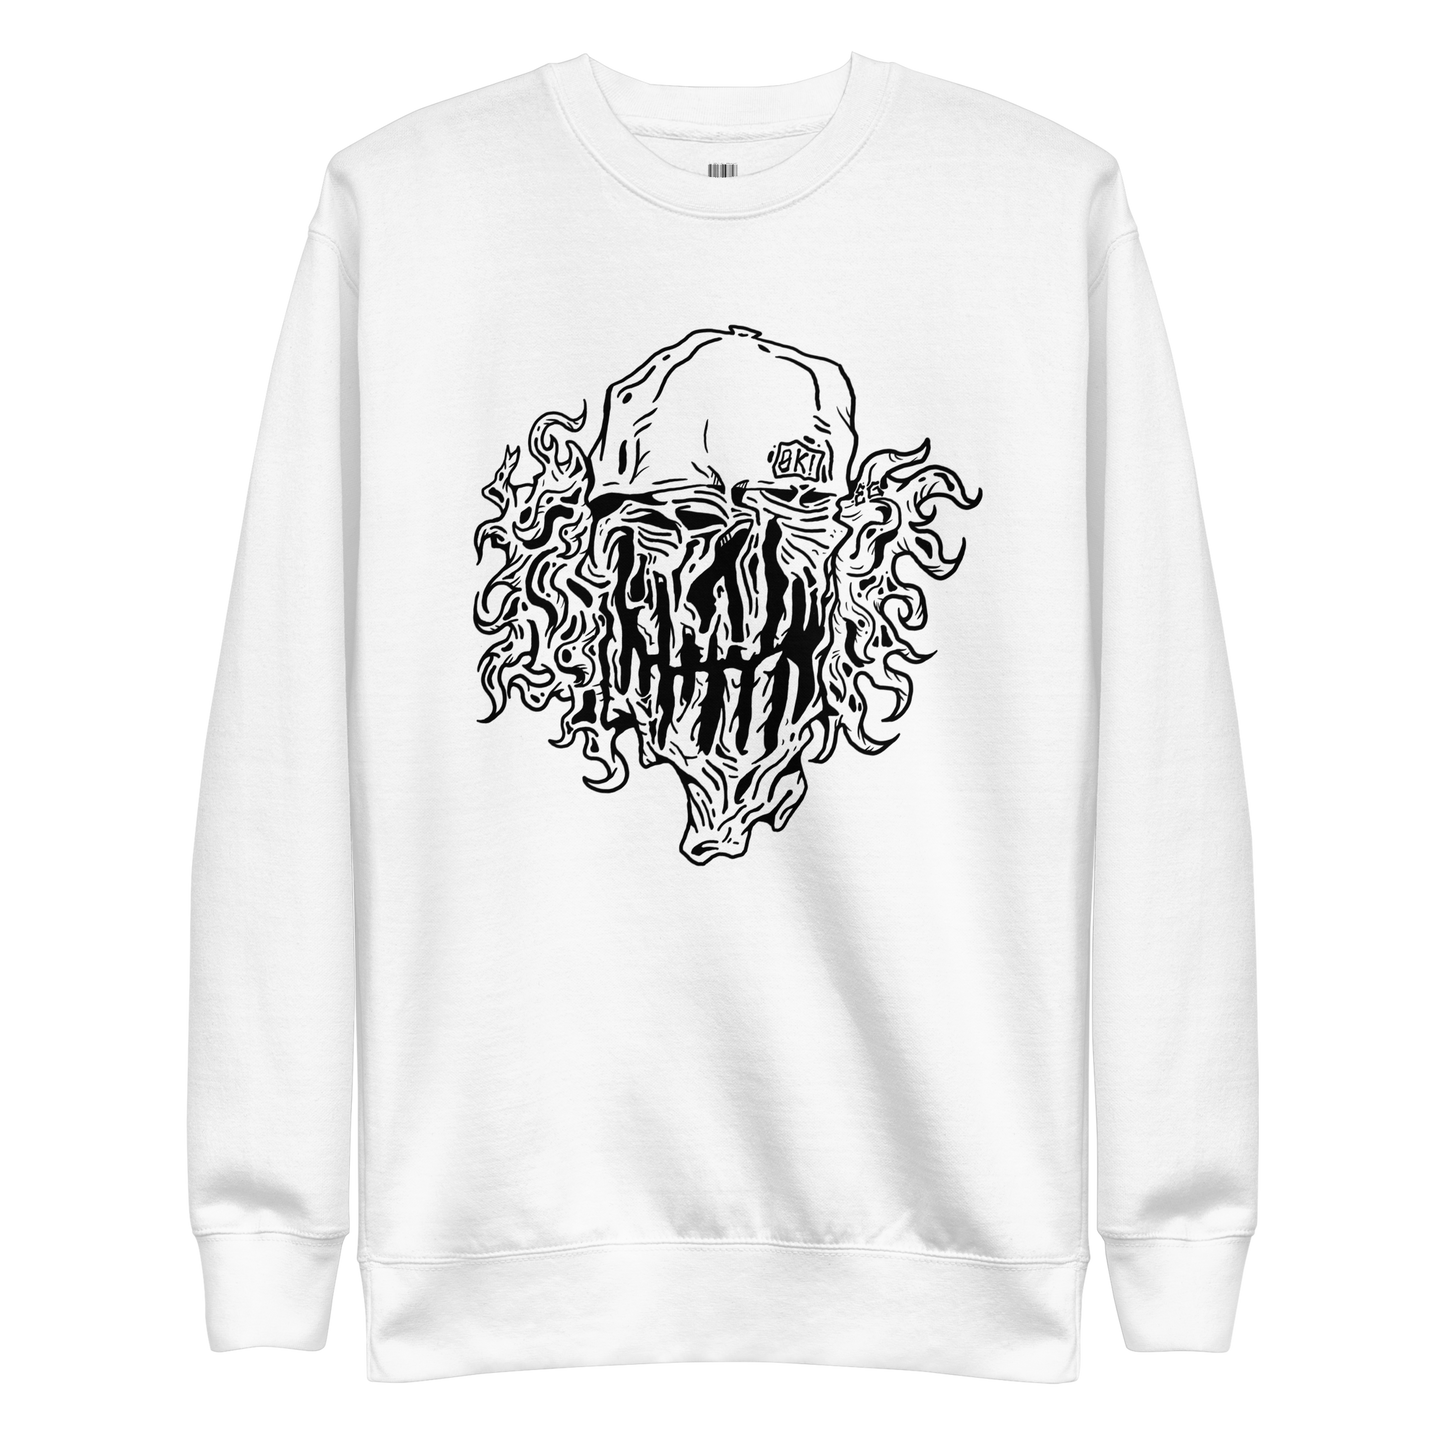 0kmateo Premium Zombie Sweatshirt